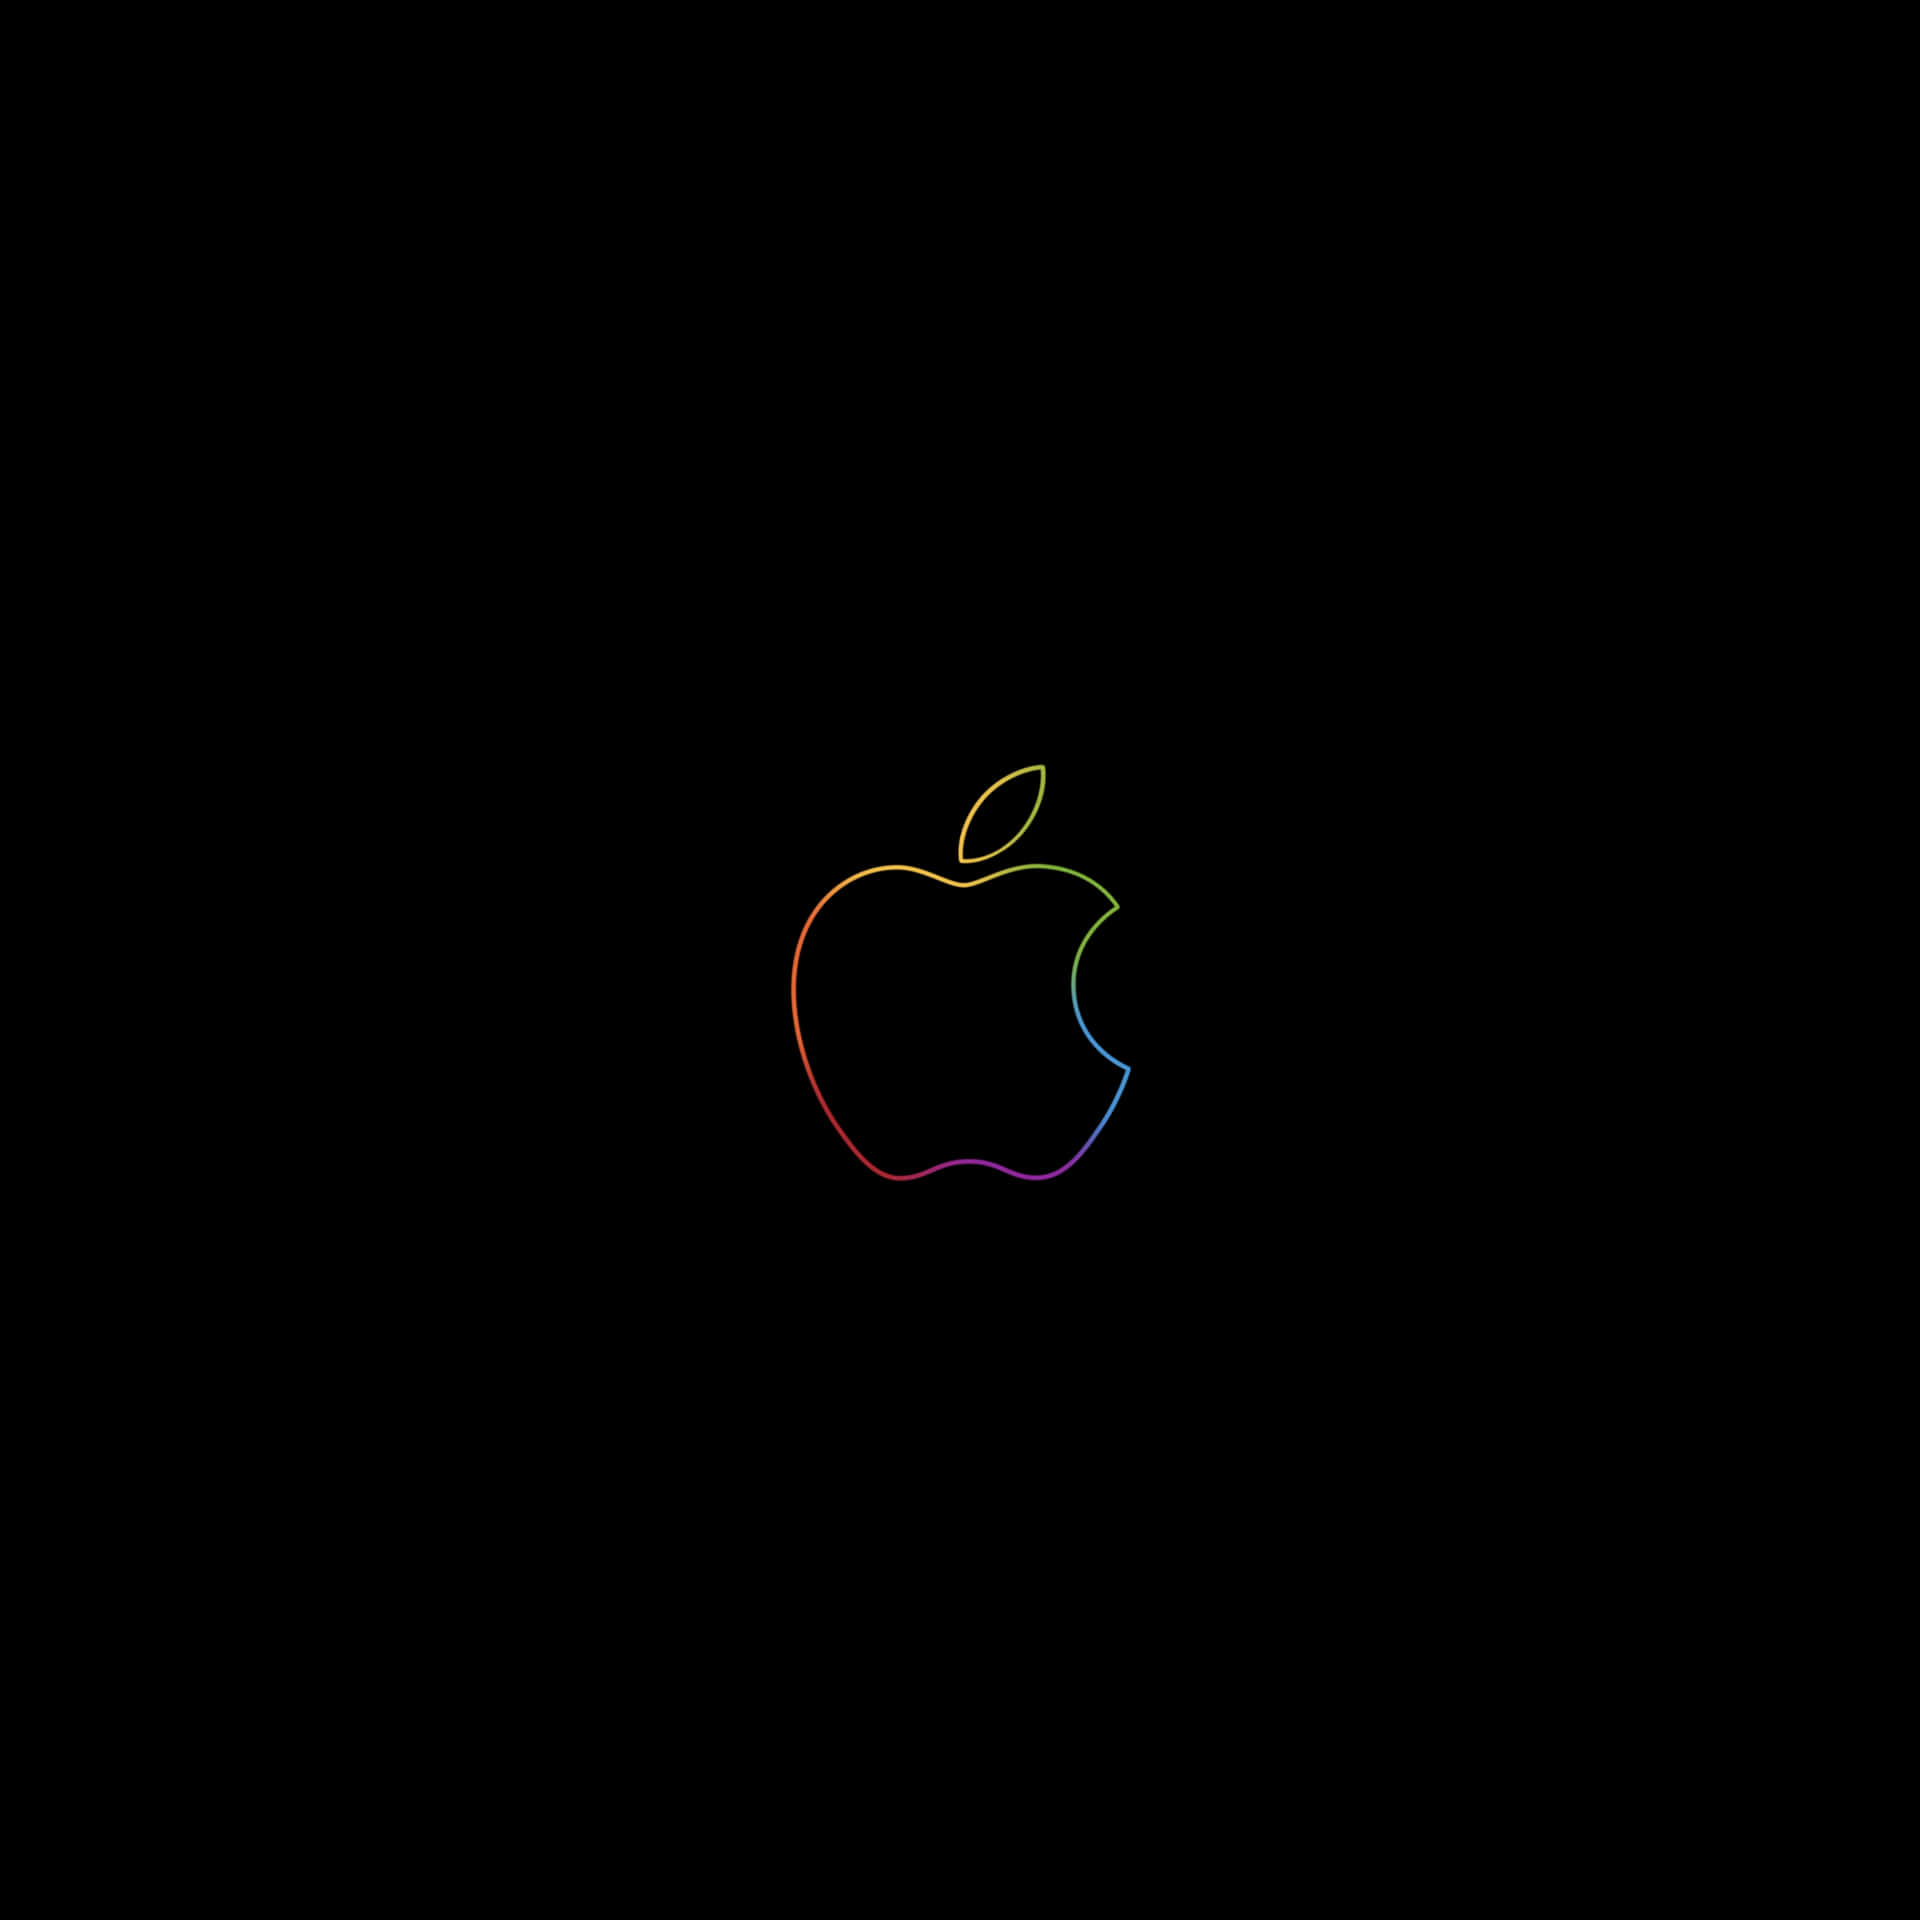 Black Apple Logo With Vibrant Outline Wallpaper